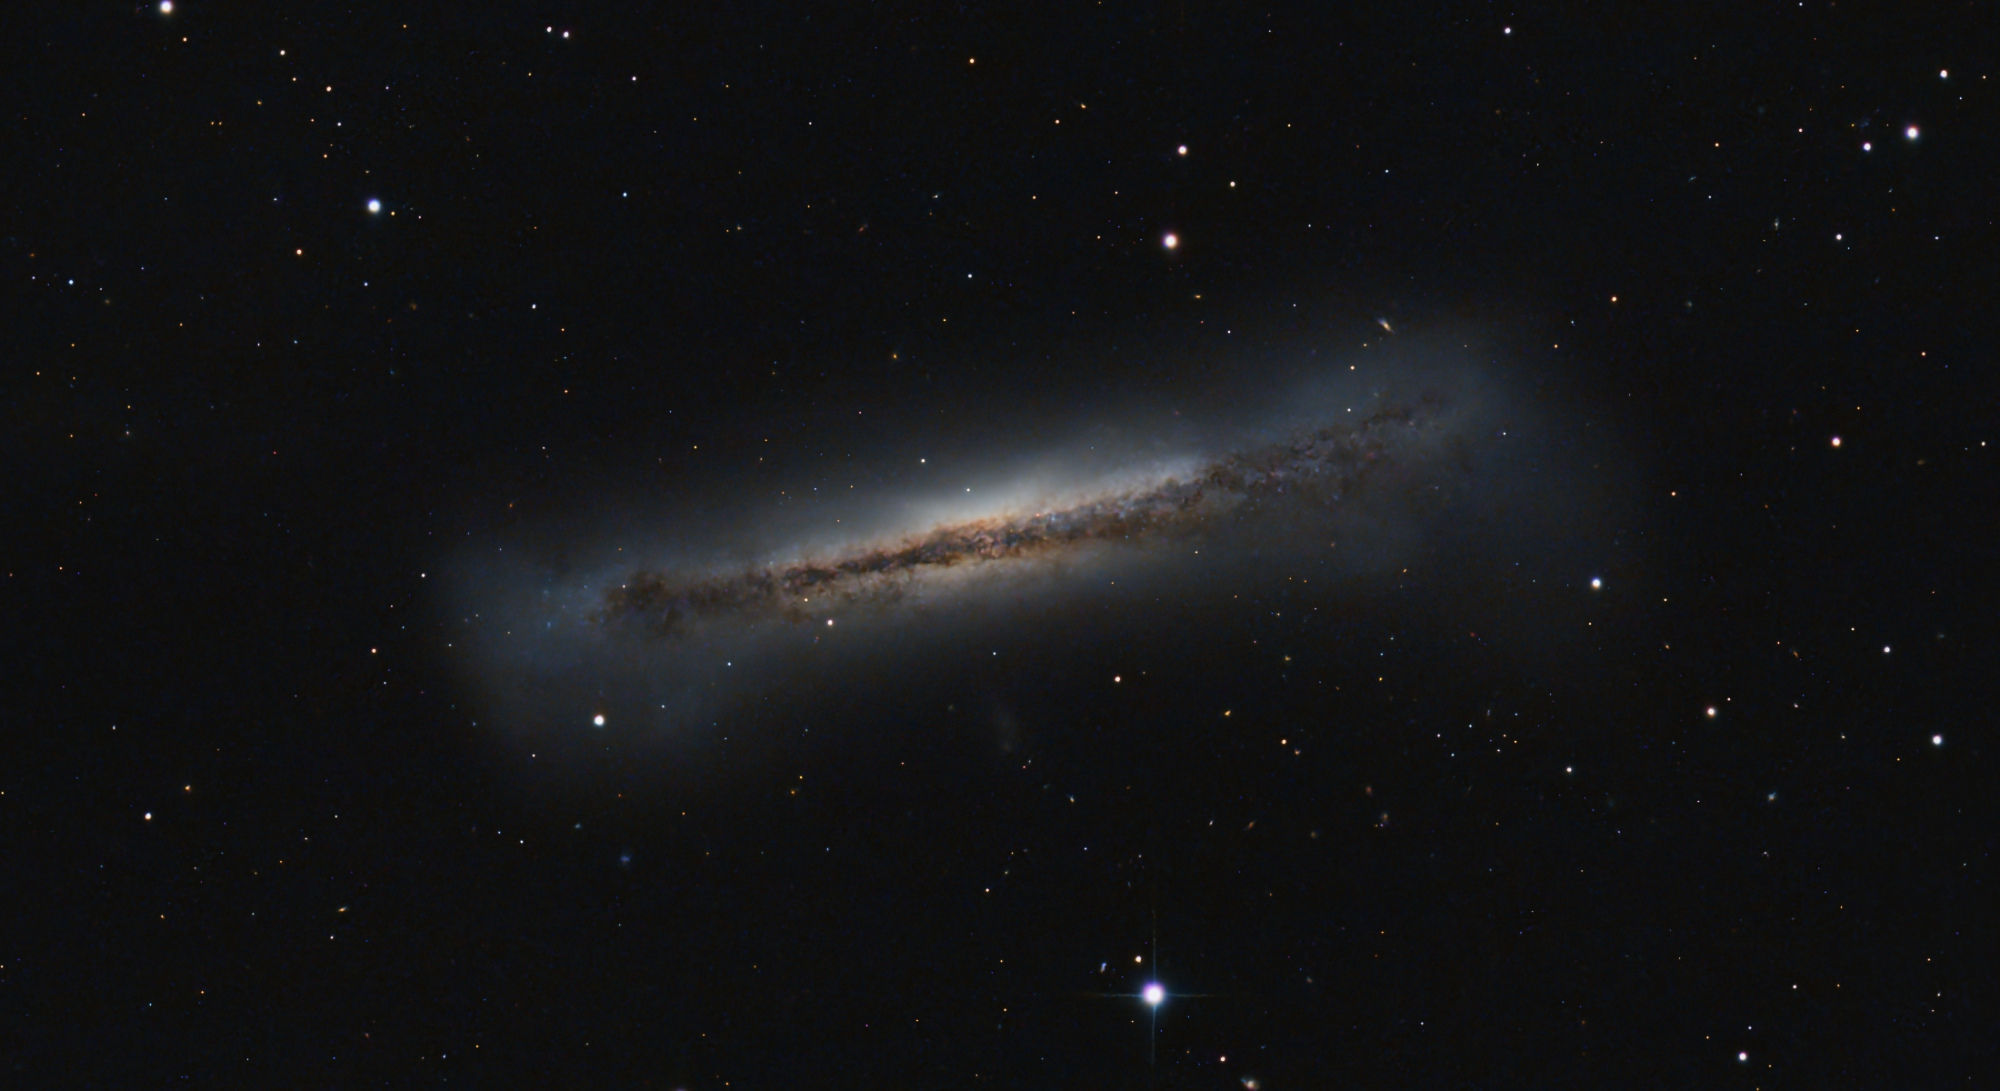 M65_Drizzle_1_5_FinPix_Crop_NGC3628.thumb.jpg.802830b1eb5a2871cb9900ba9570bada.jpg